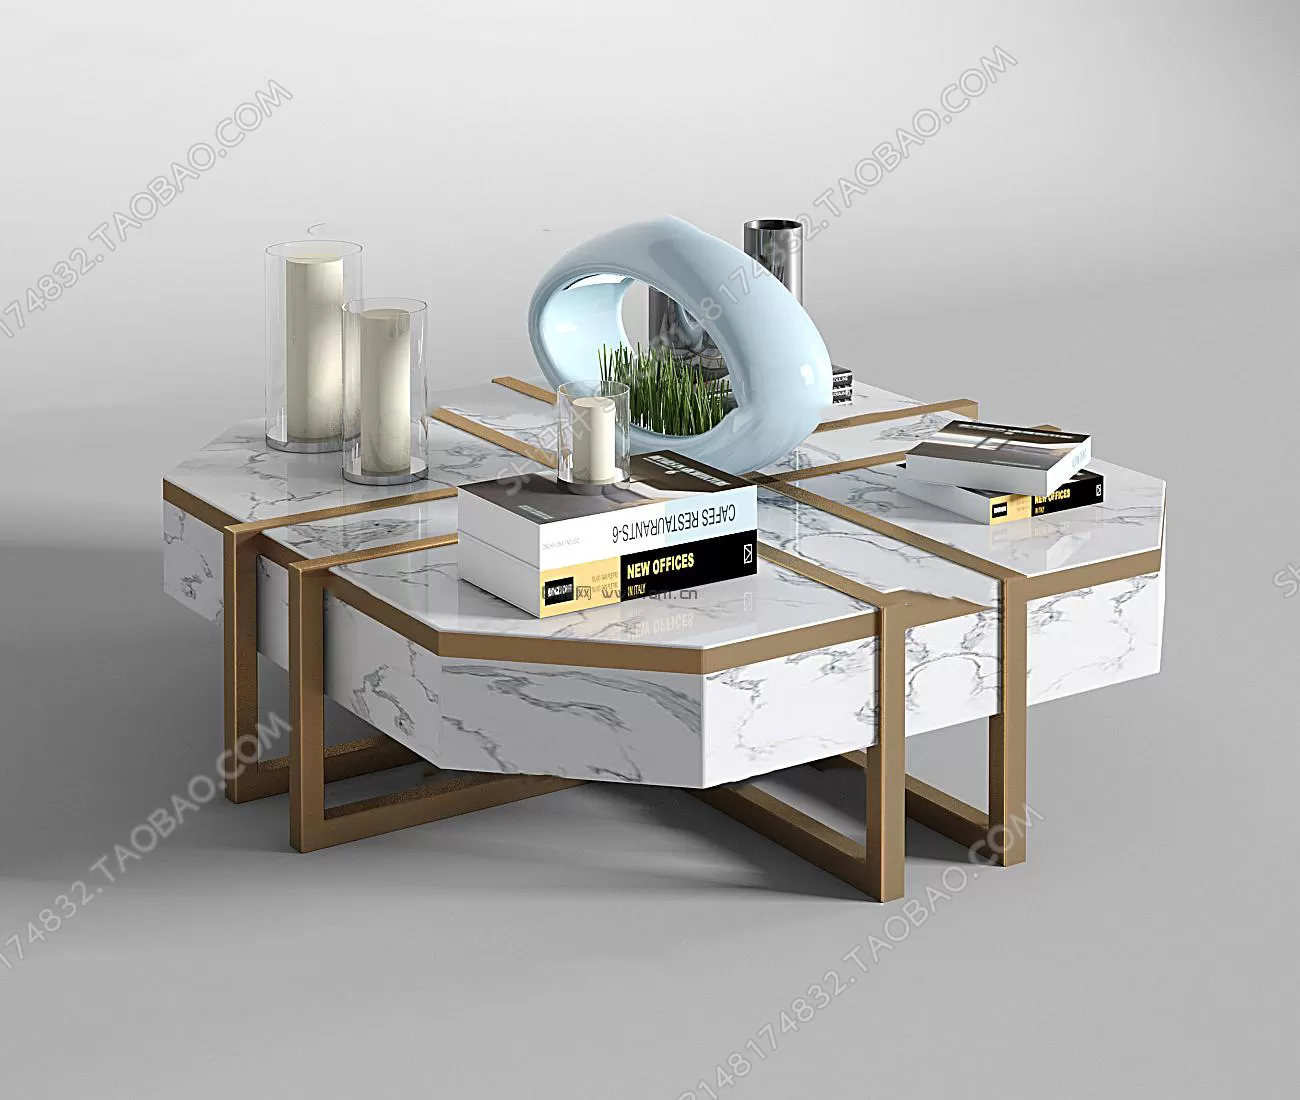 3DSKY MODELS – COFFEE TABLE 3D MODELS – 032